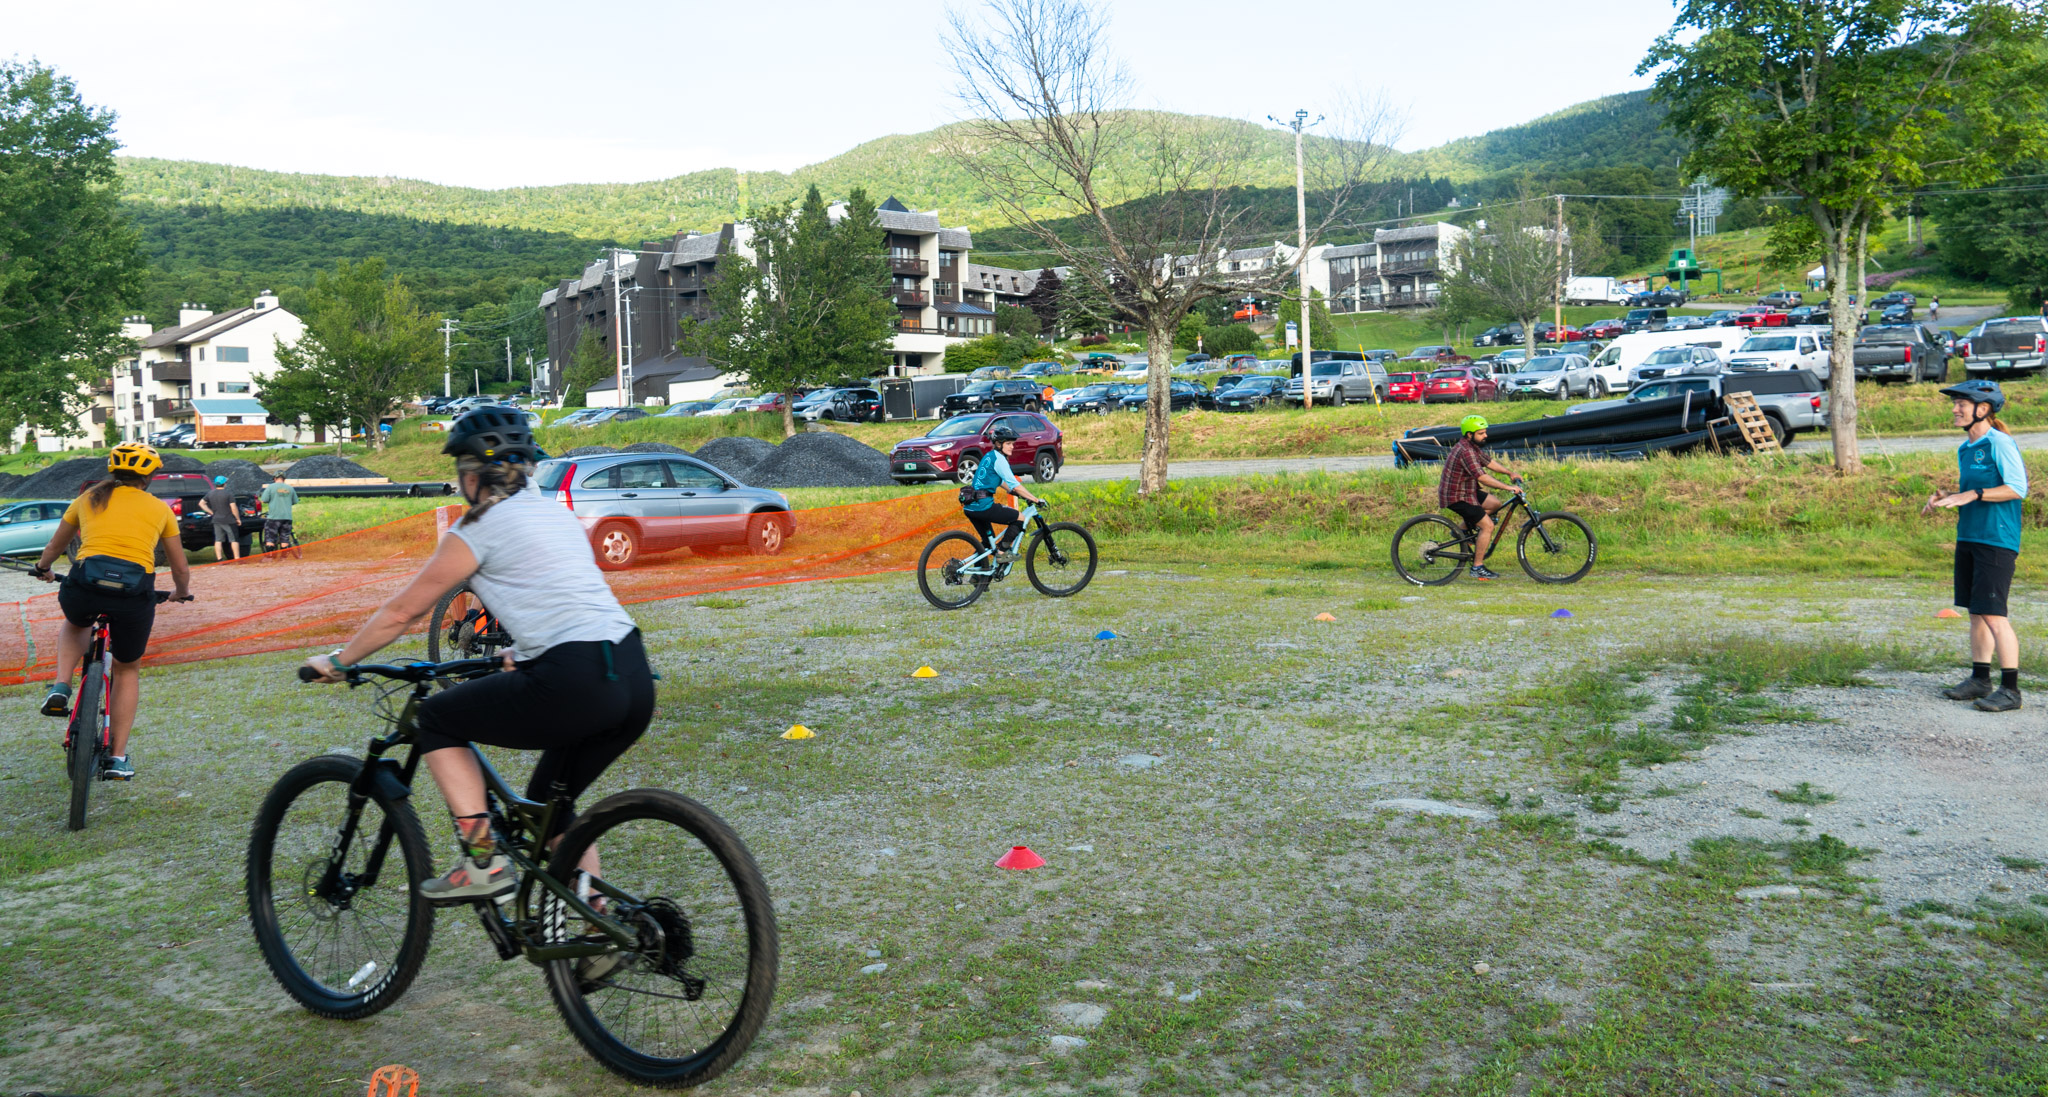 Beginner mountain bike group practice drills in the Progression Zone